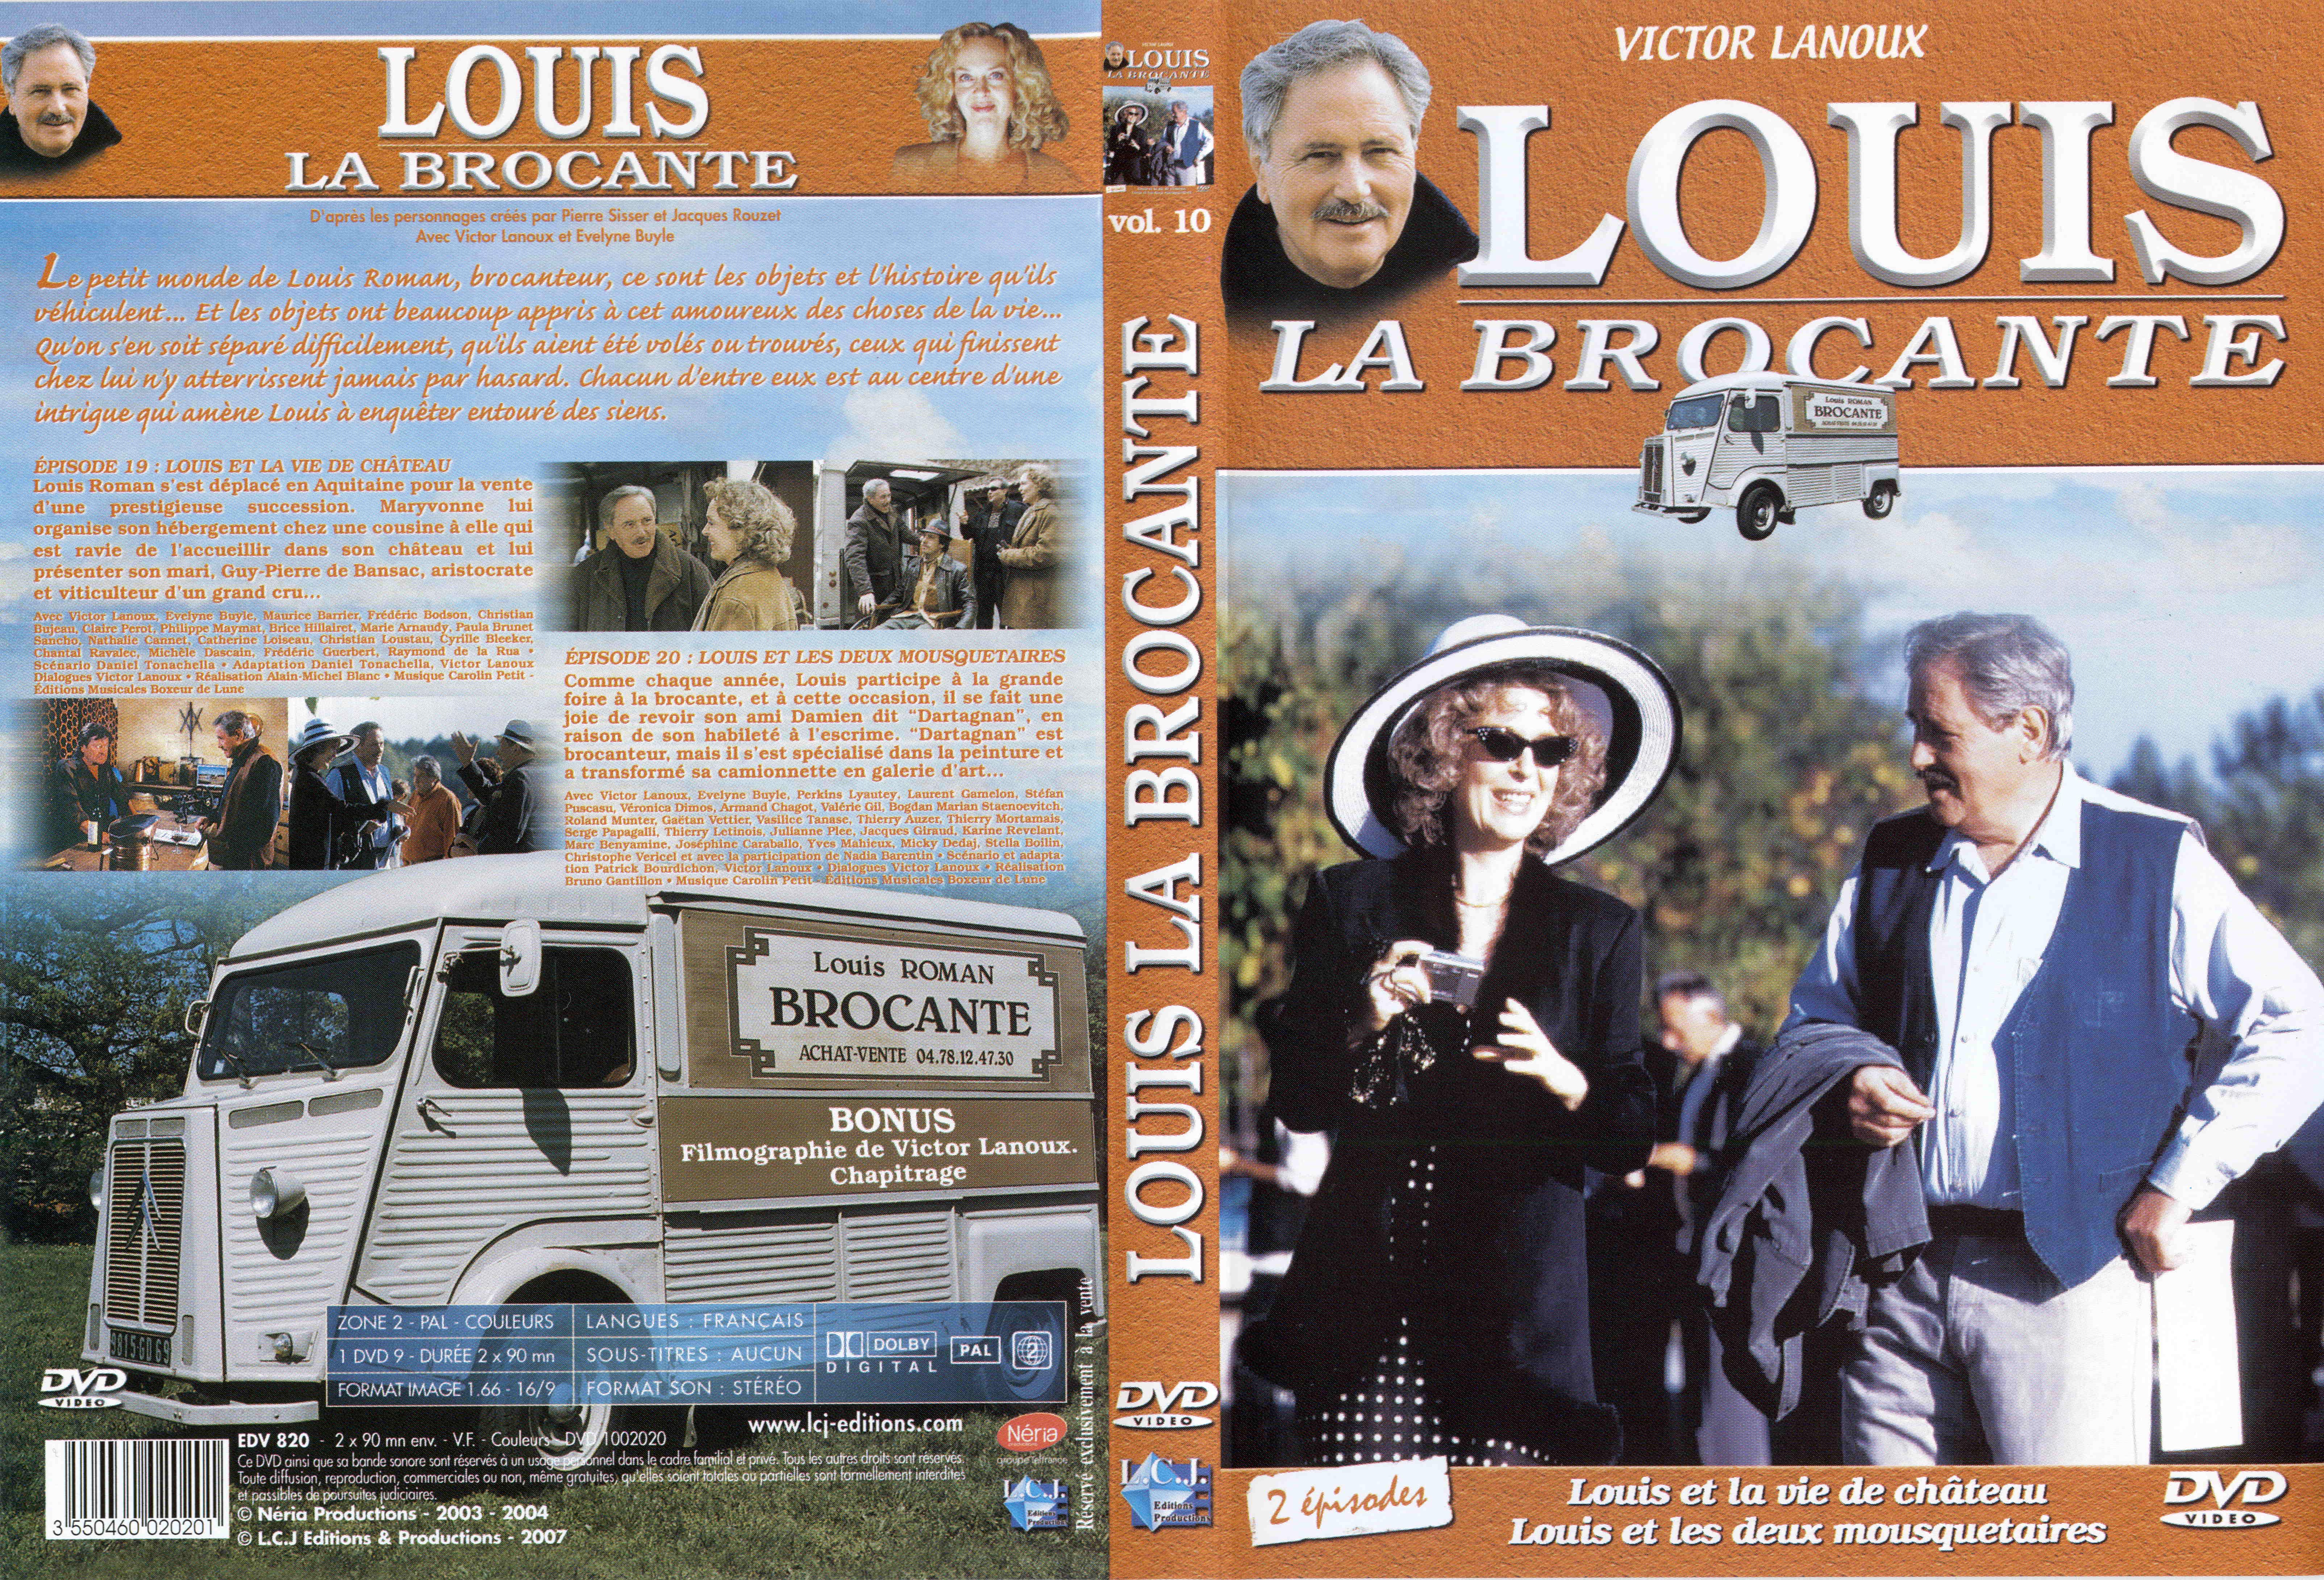 Jaquette DVD Louis la brocante vol 10